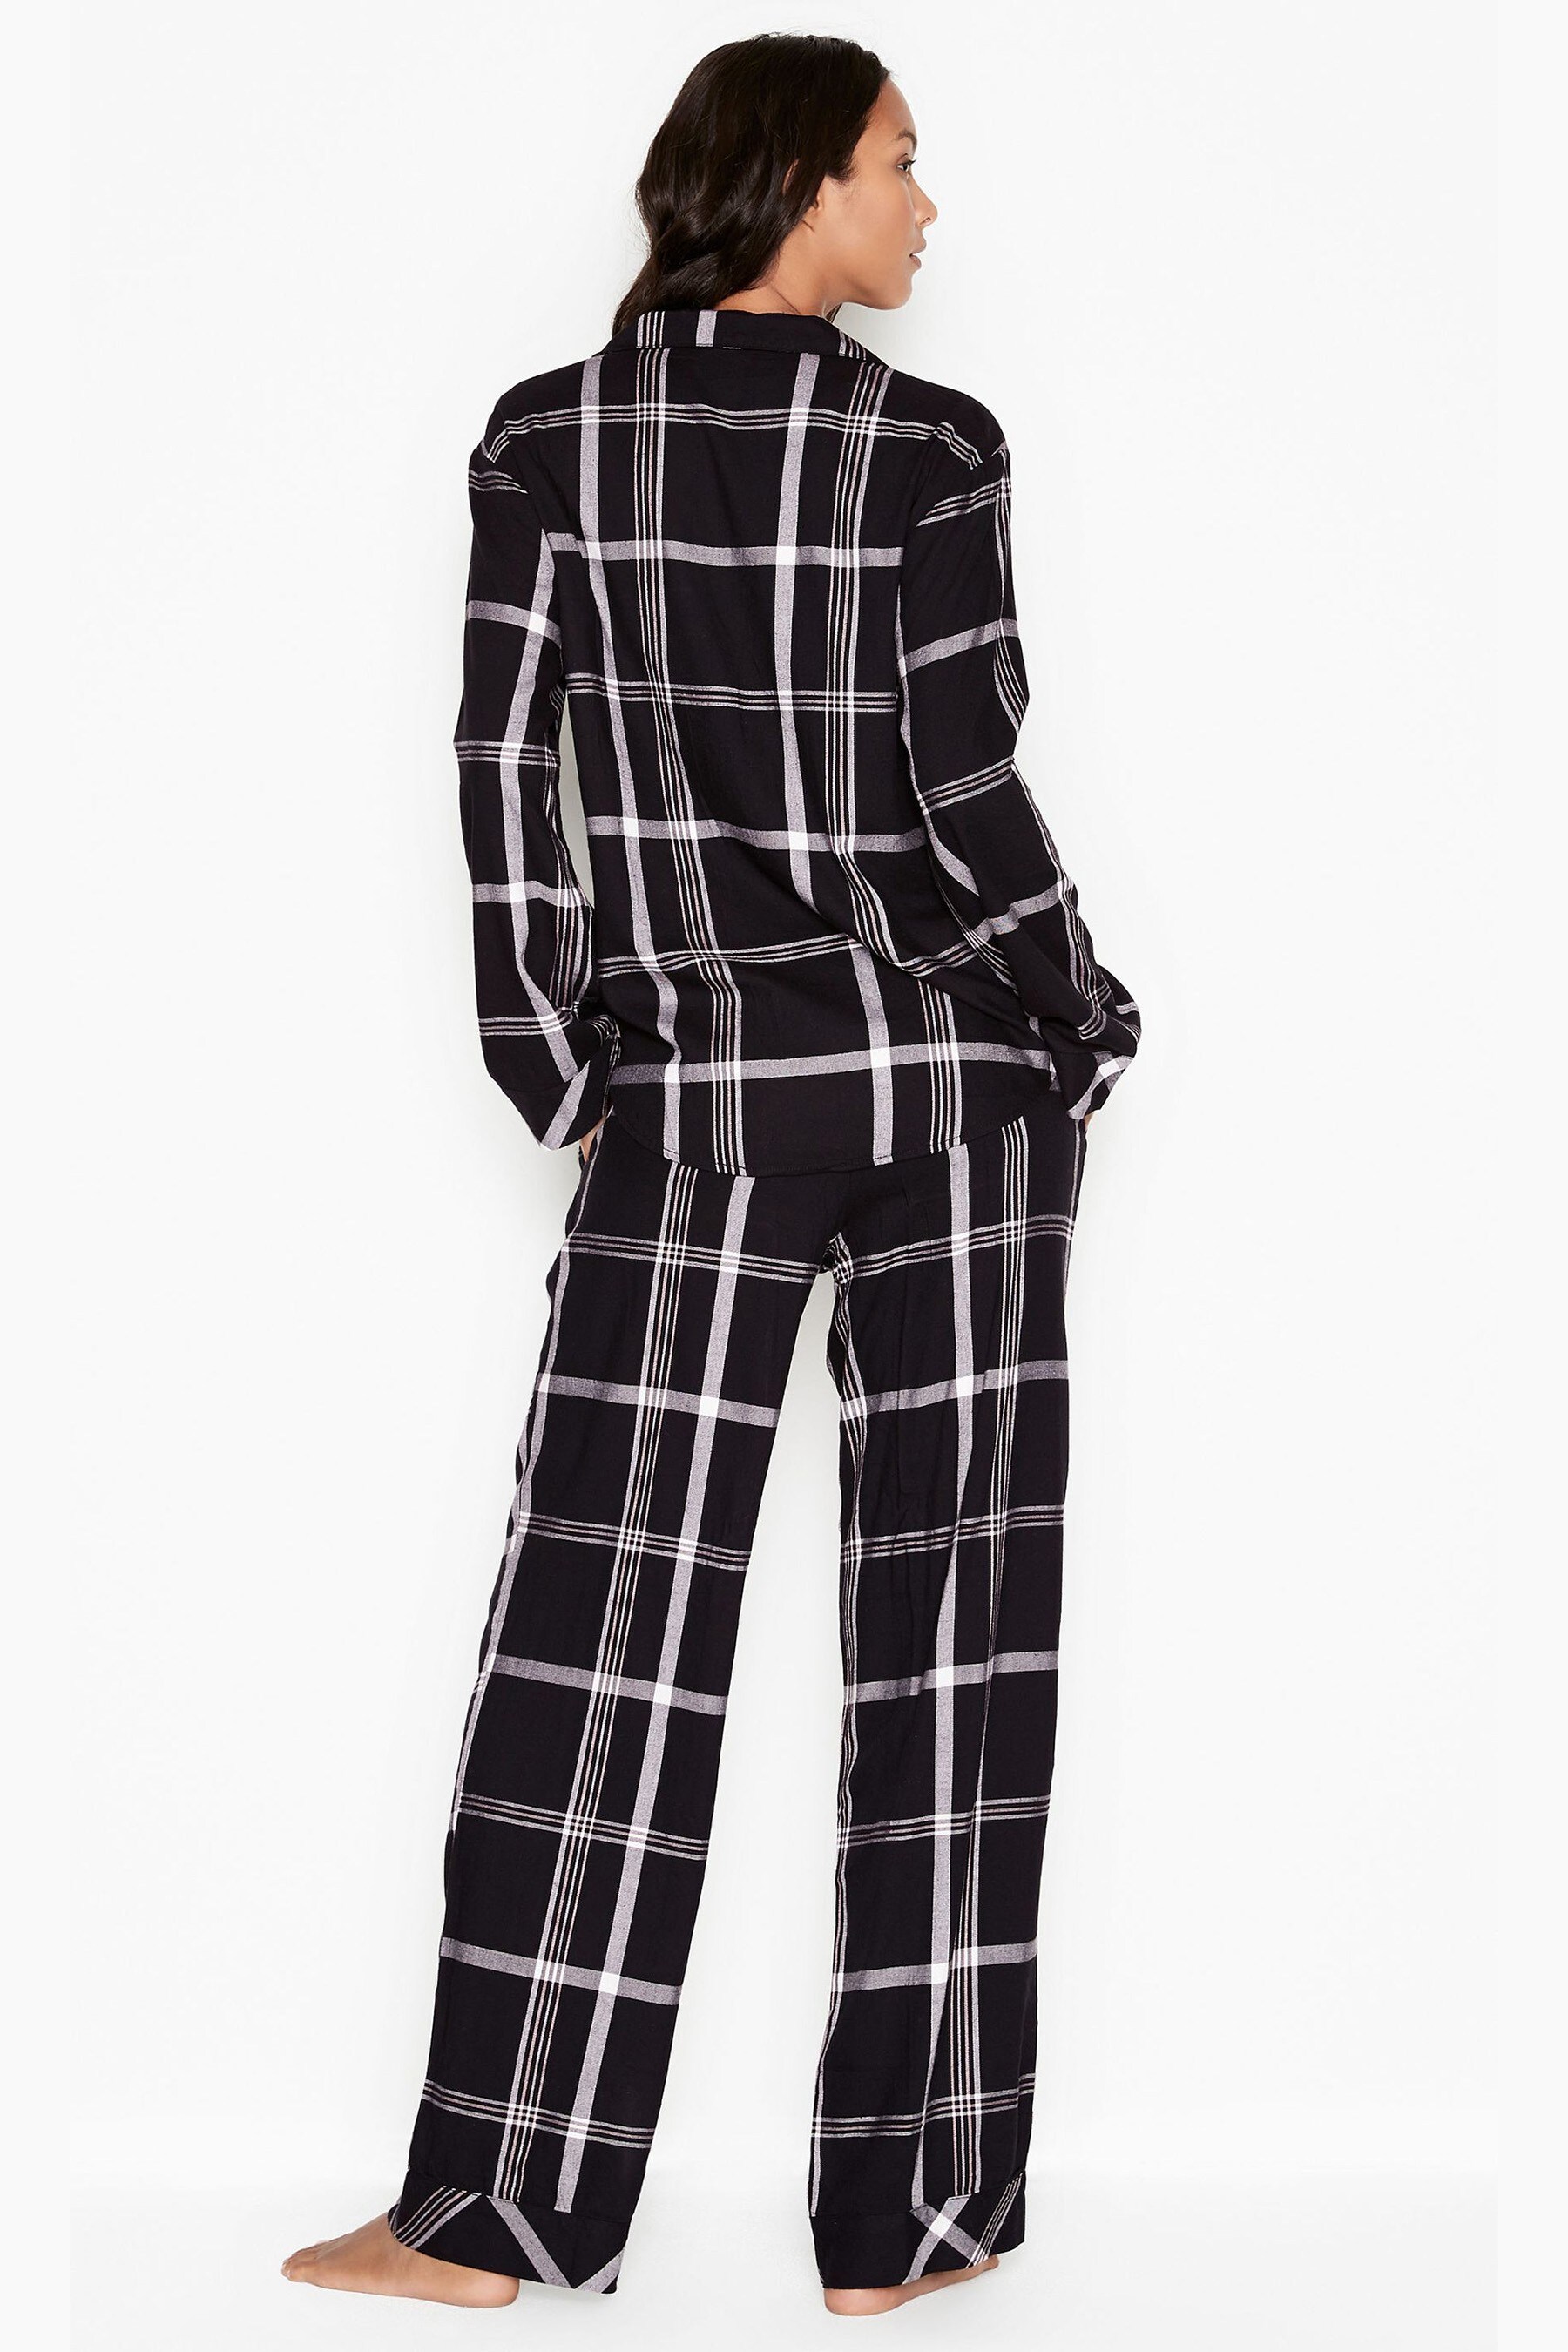 Buy Victoria’s Secret Cotton Flannel Long Pyjamas from the Victoria's